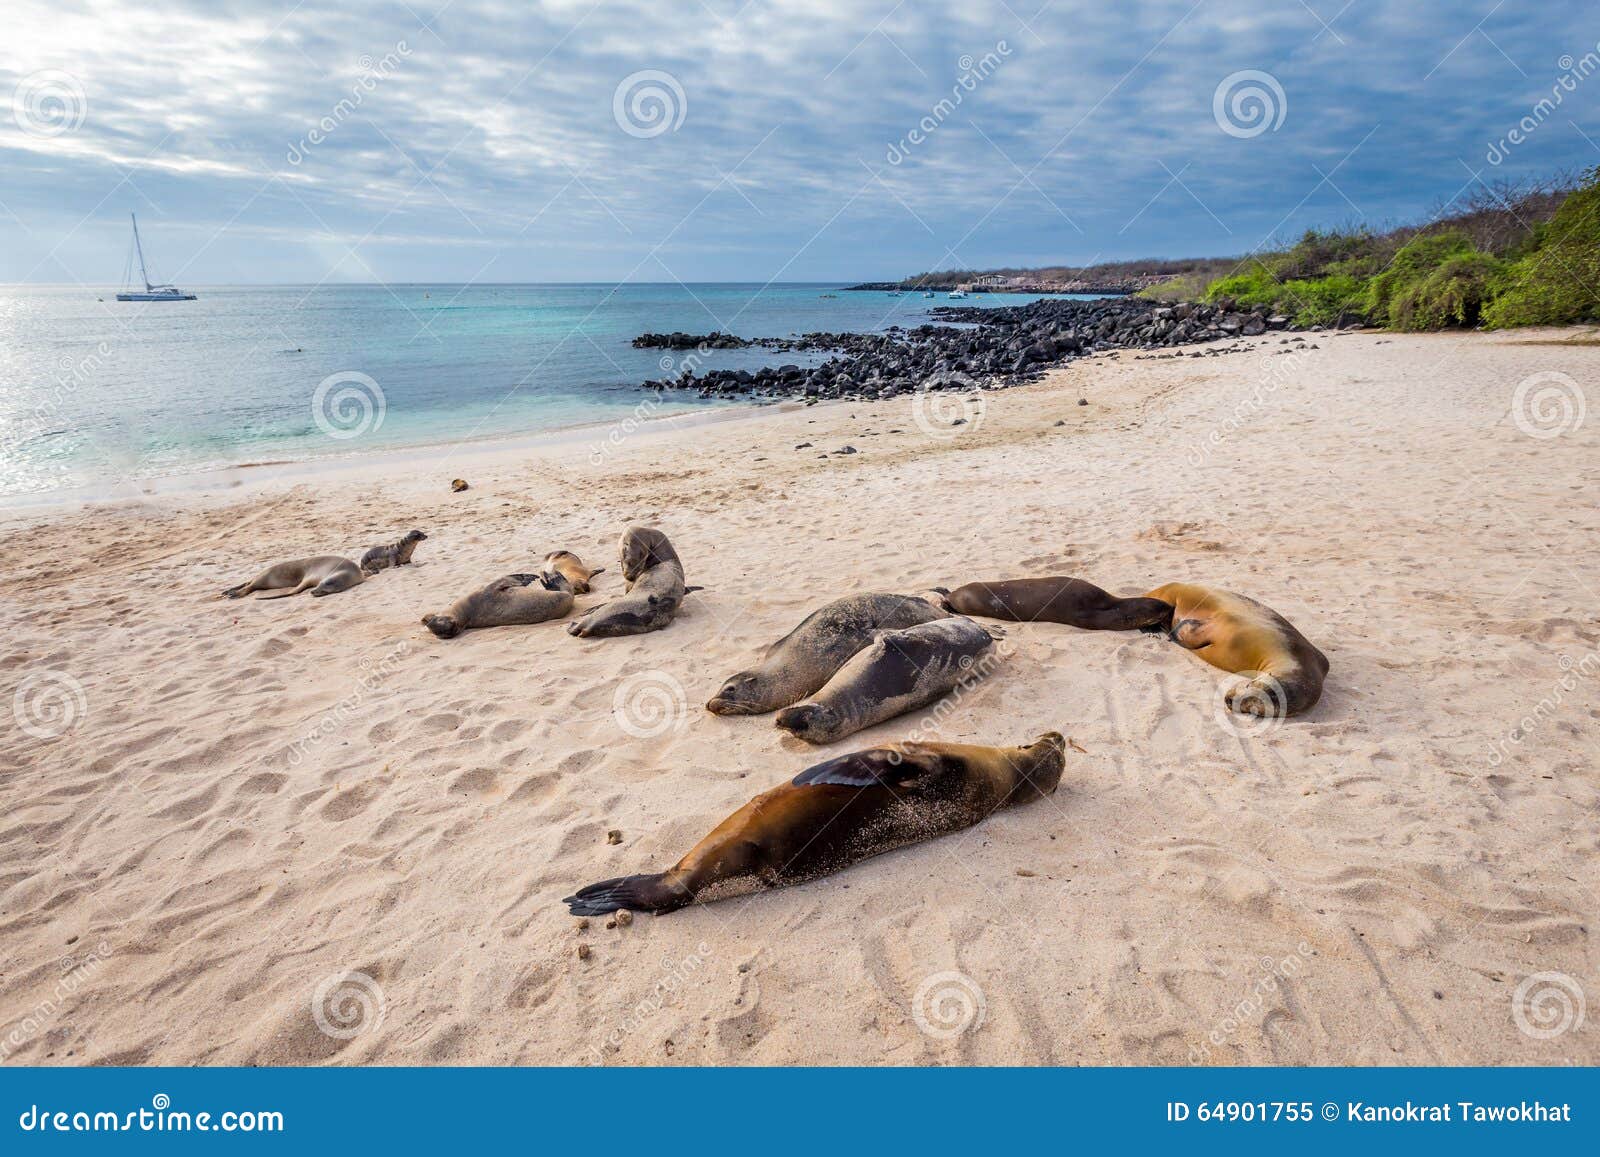 sea lions on mann beach san cristobal, galapagos islands